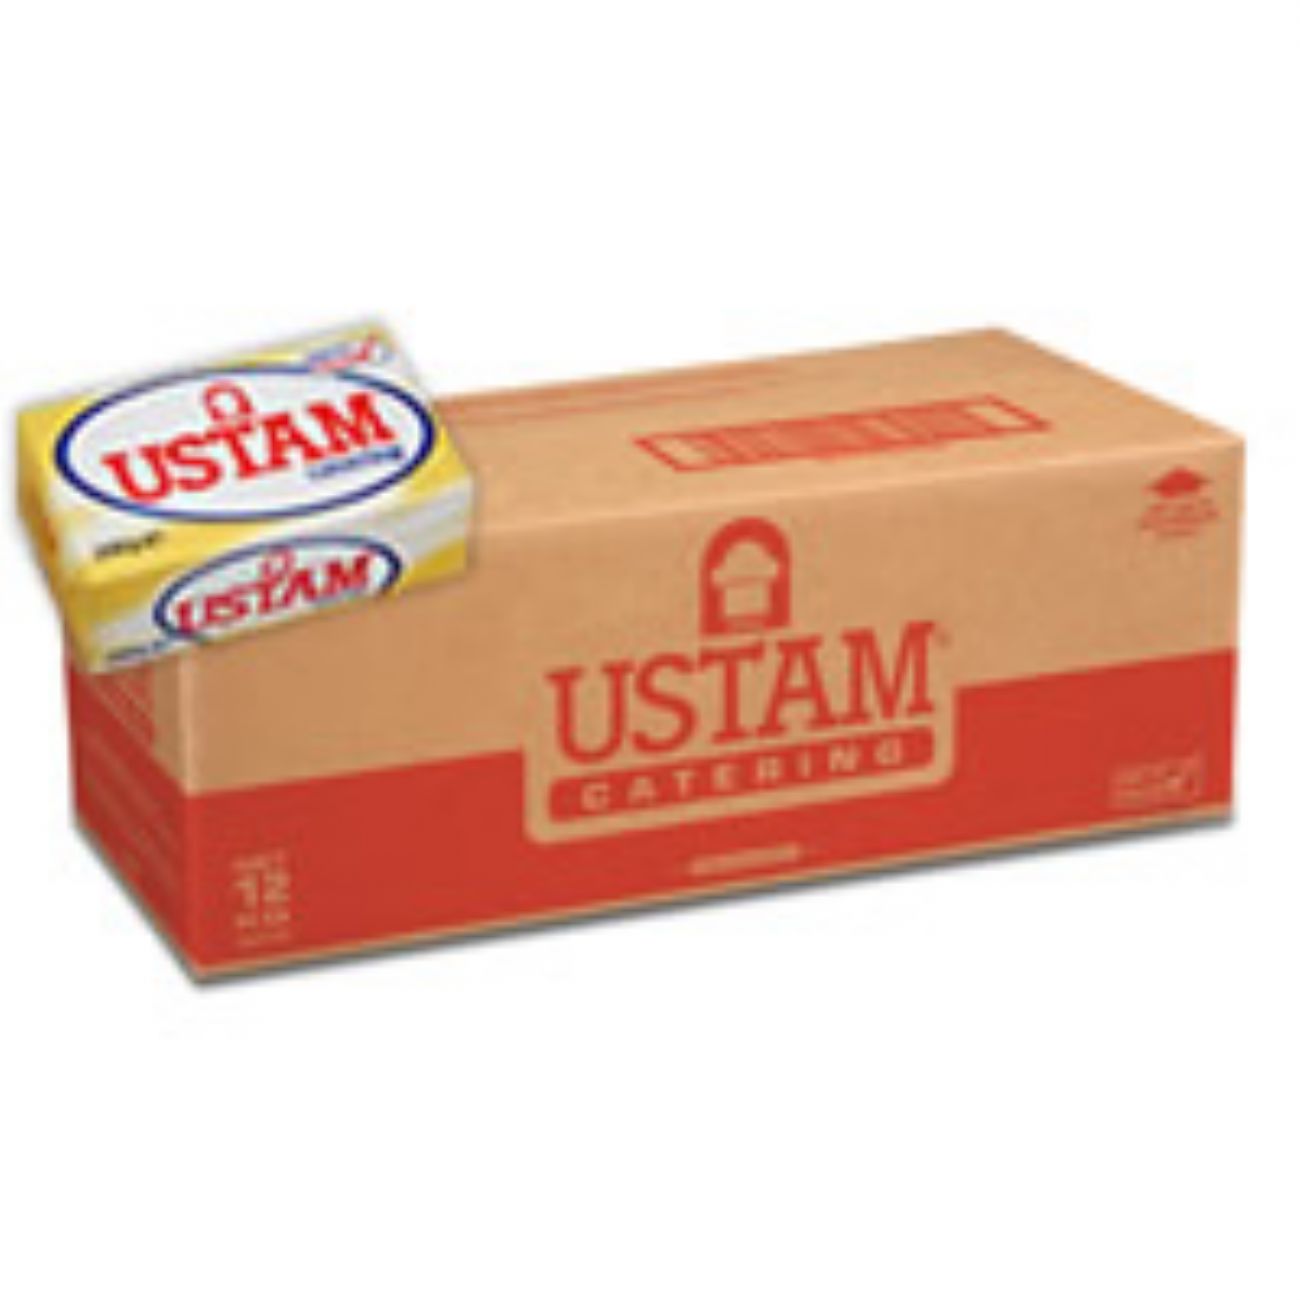 Ustam Paket Margarin 250 Gram (48 Adet)